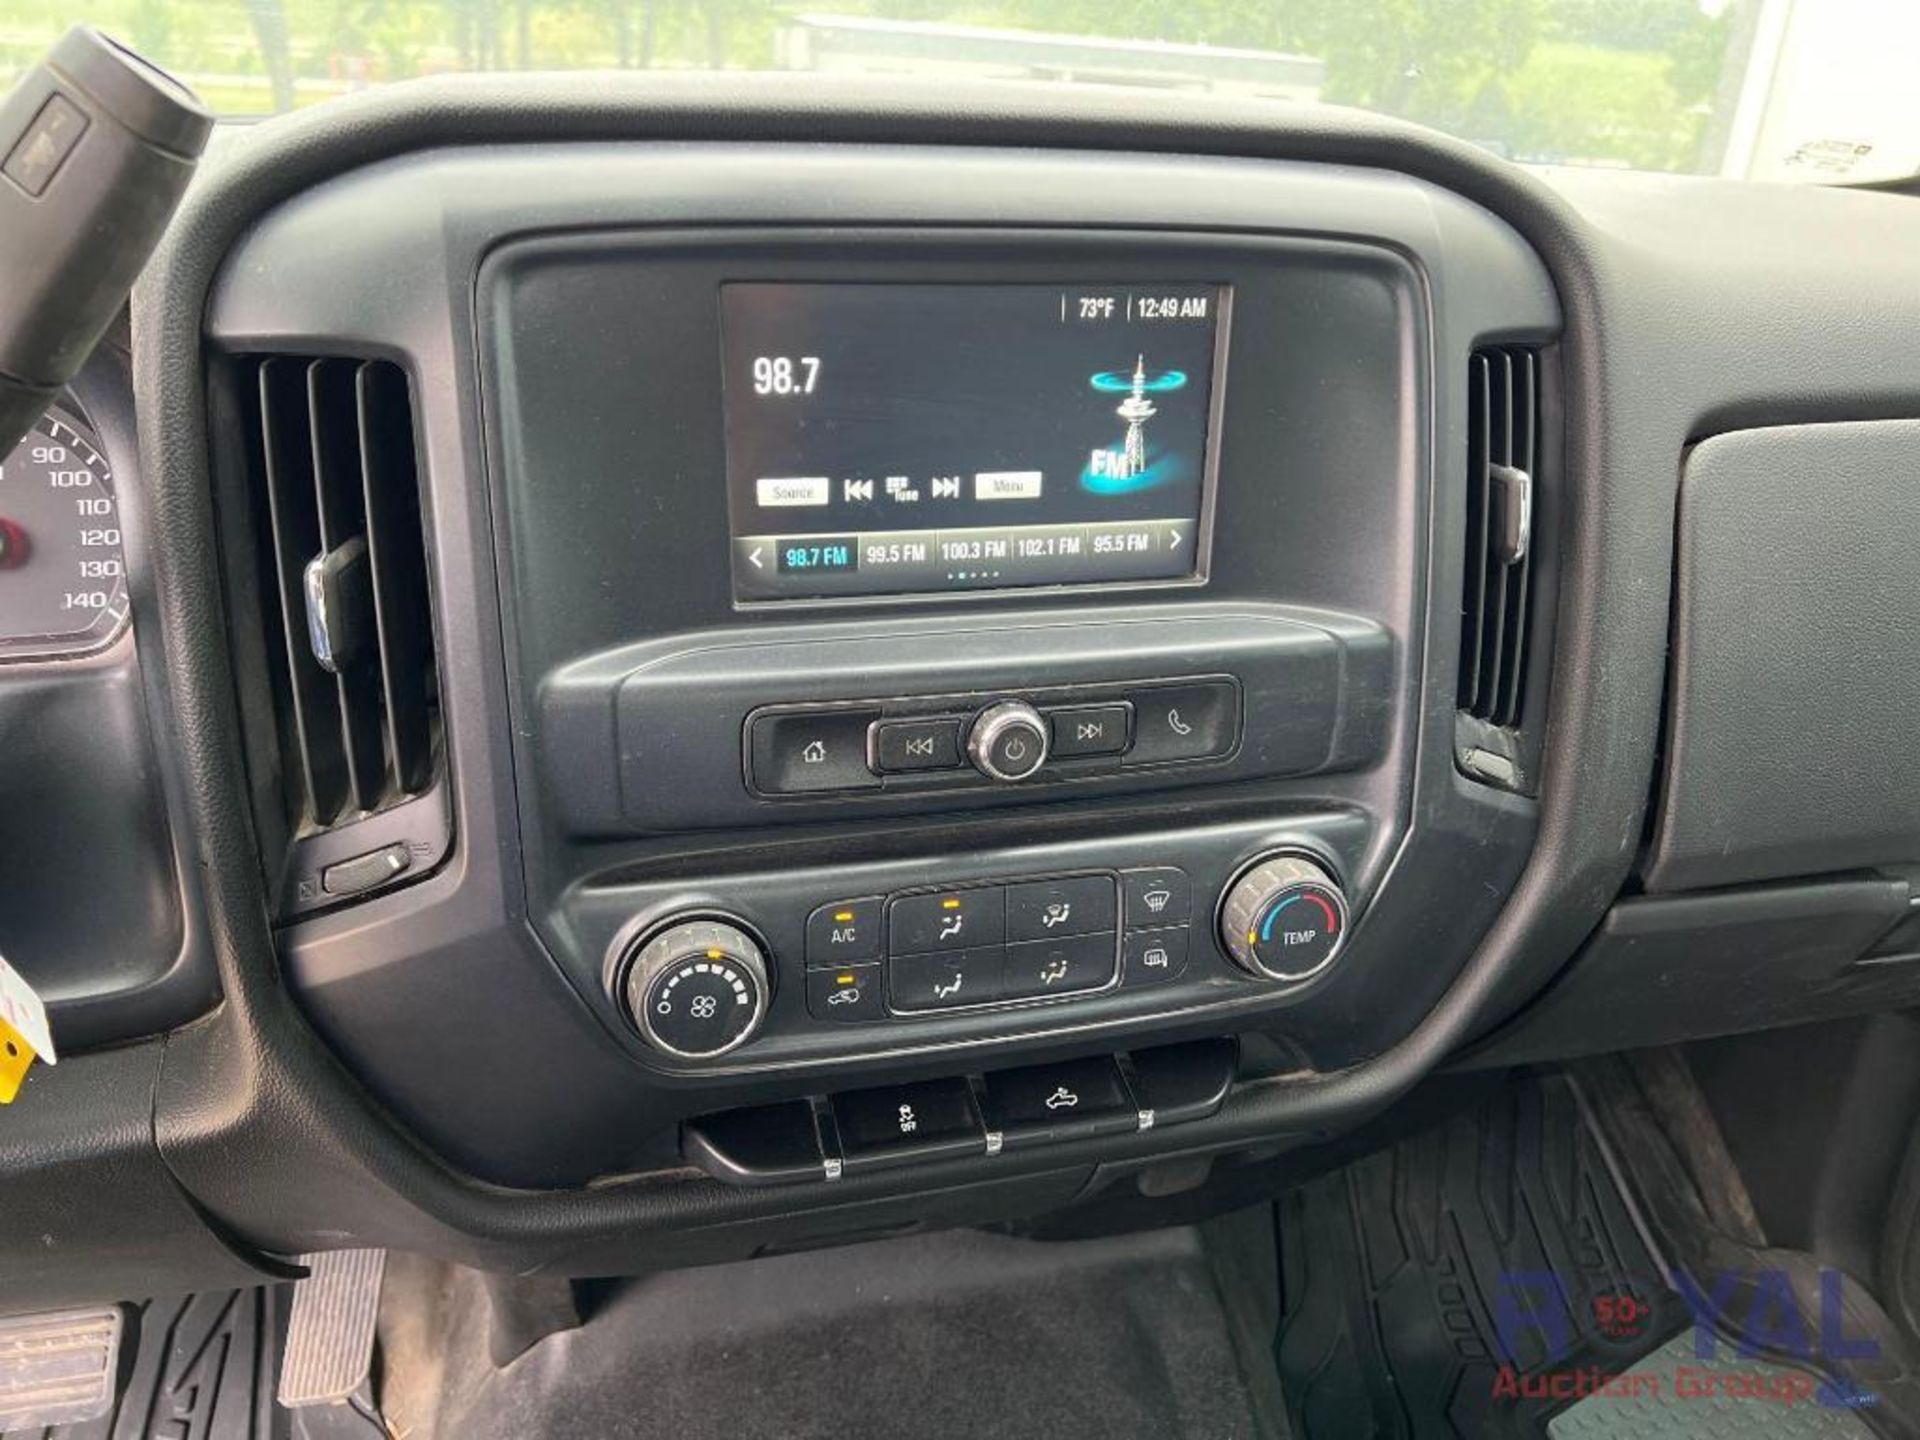 2018 Chevrolet Silverado 4x4 Crew Cab Pickup Truck - Image 23 of 51